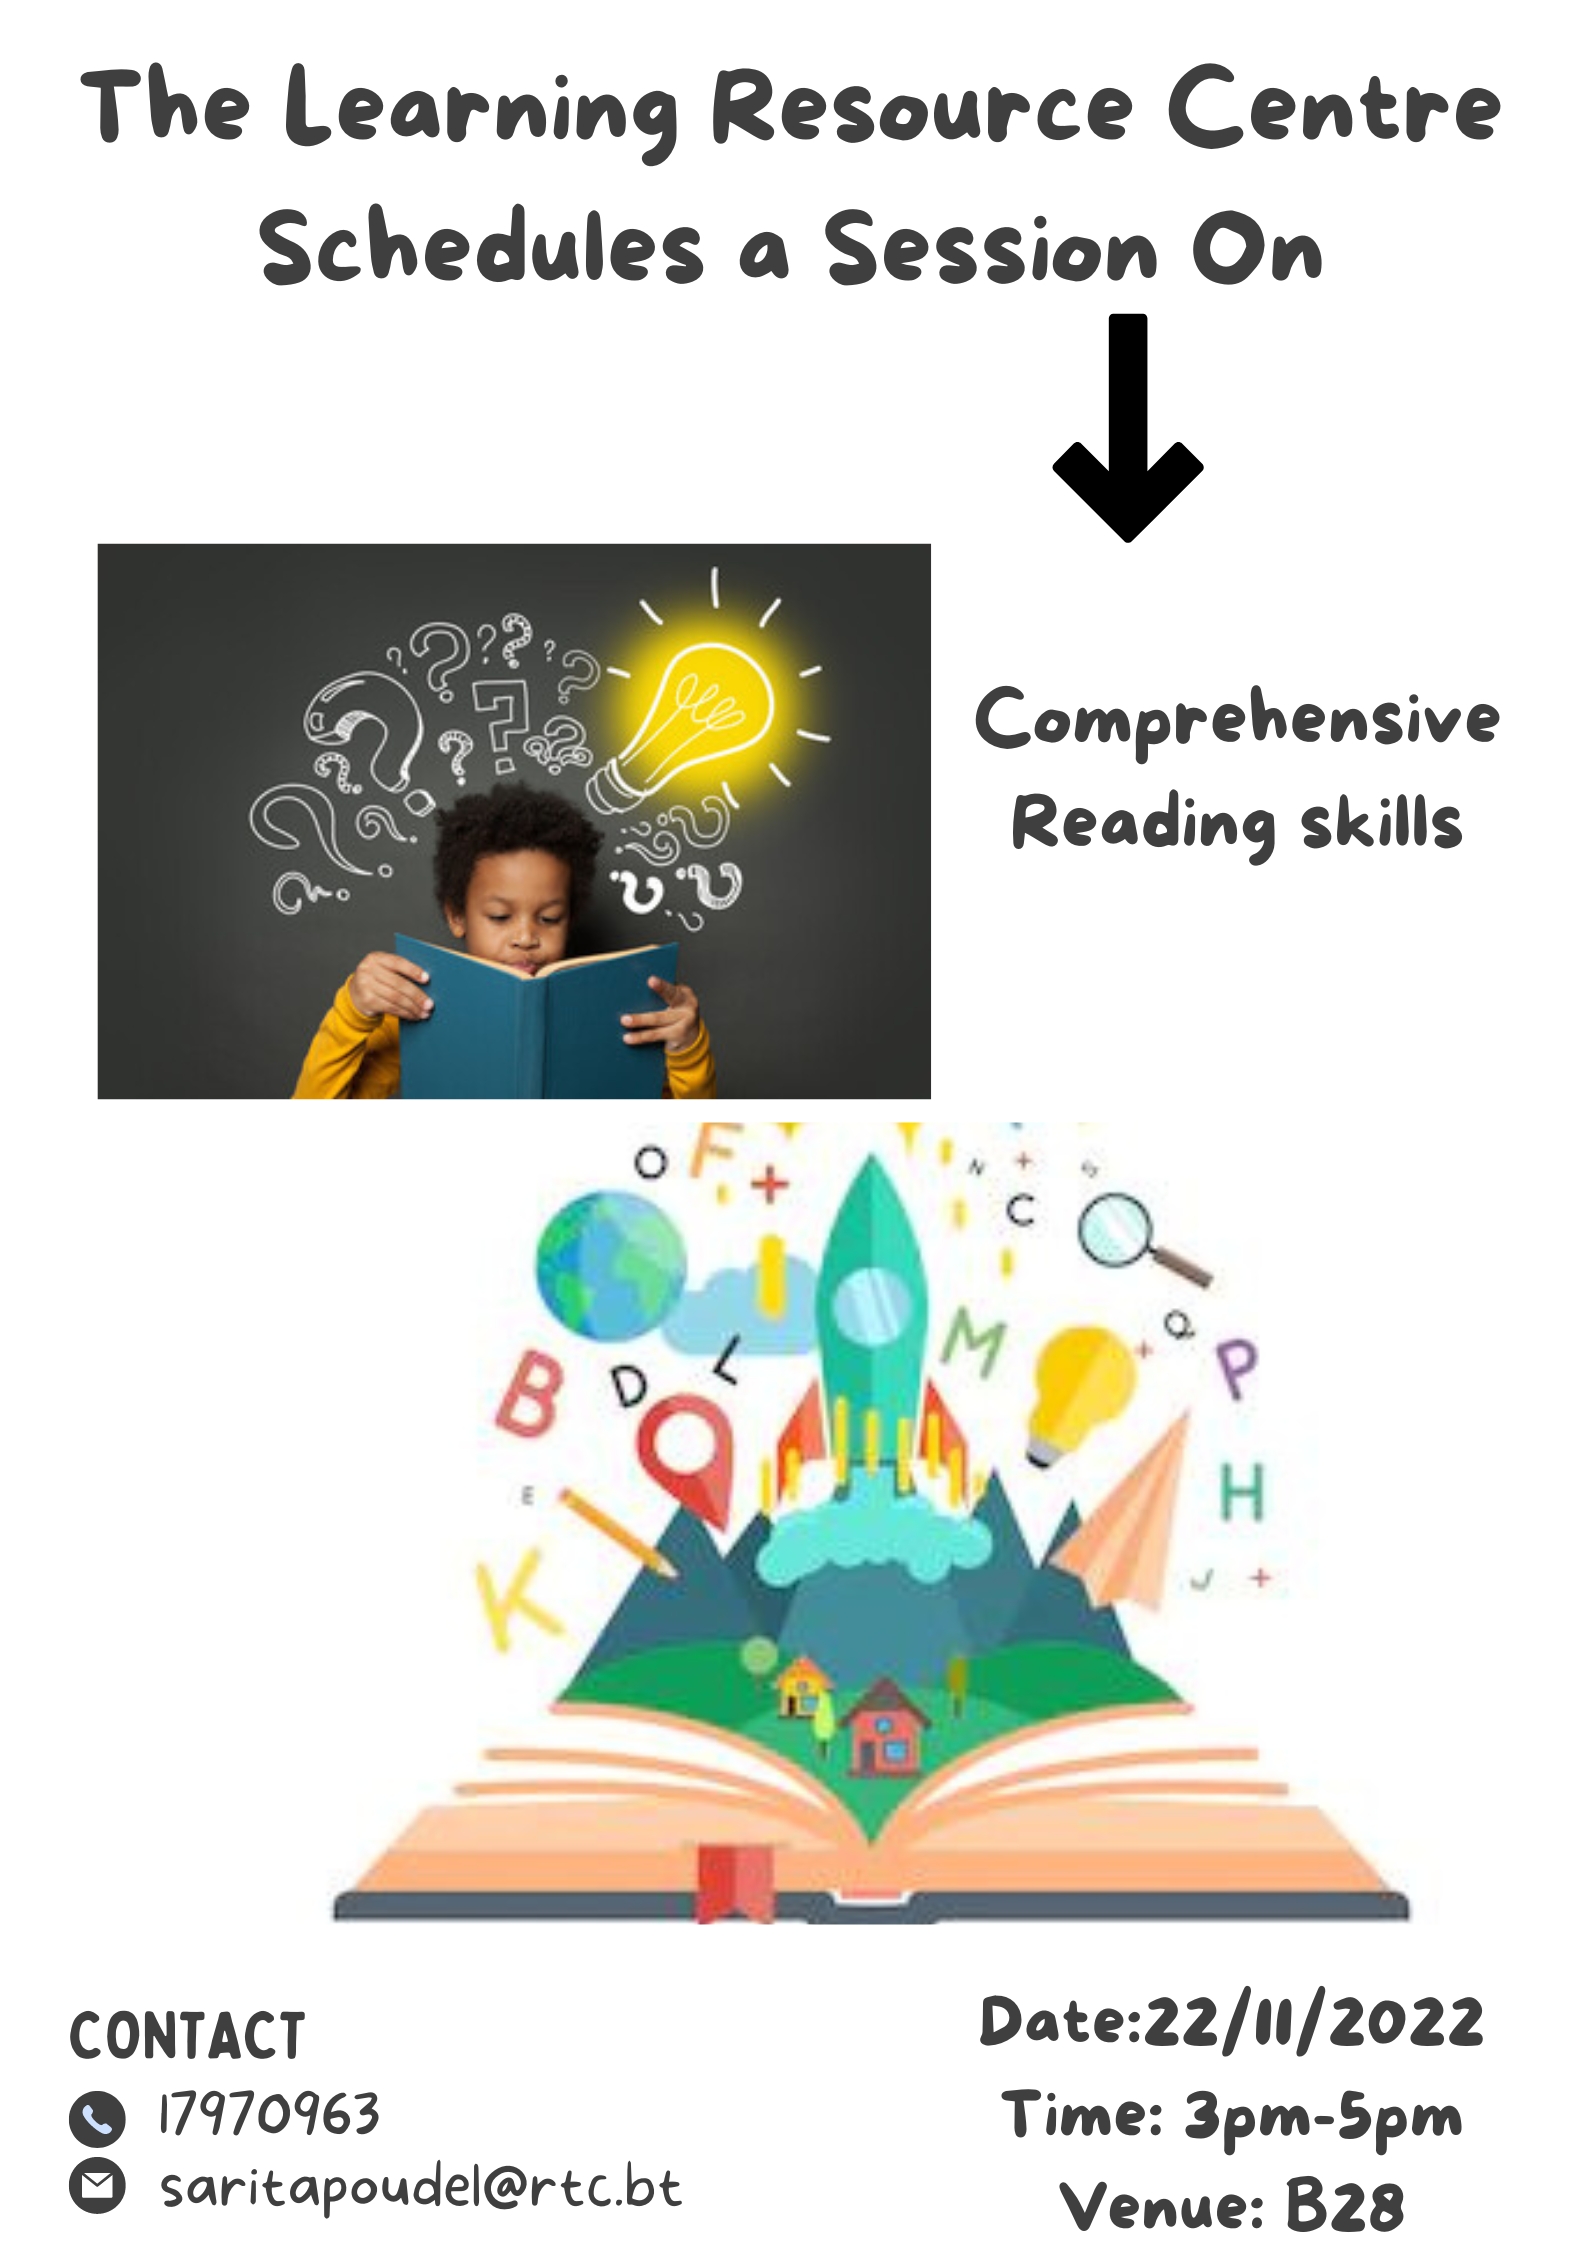 Comprehensive Reading skills